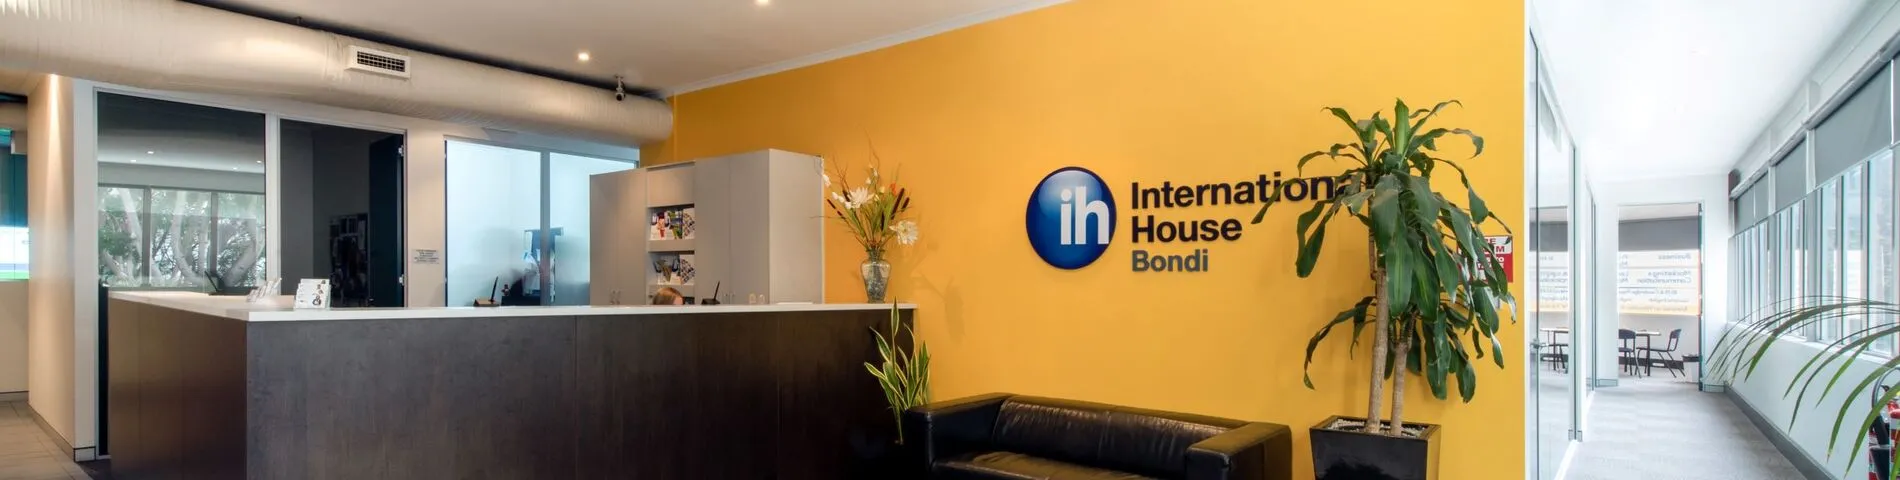 International House画像1